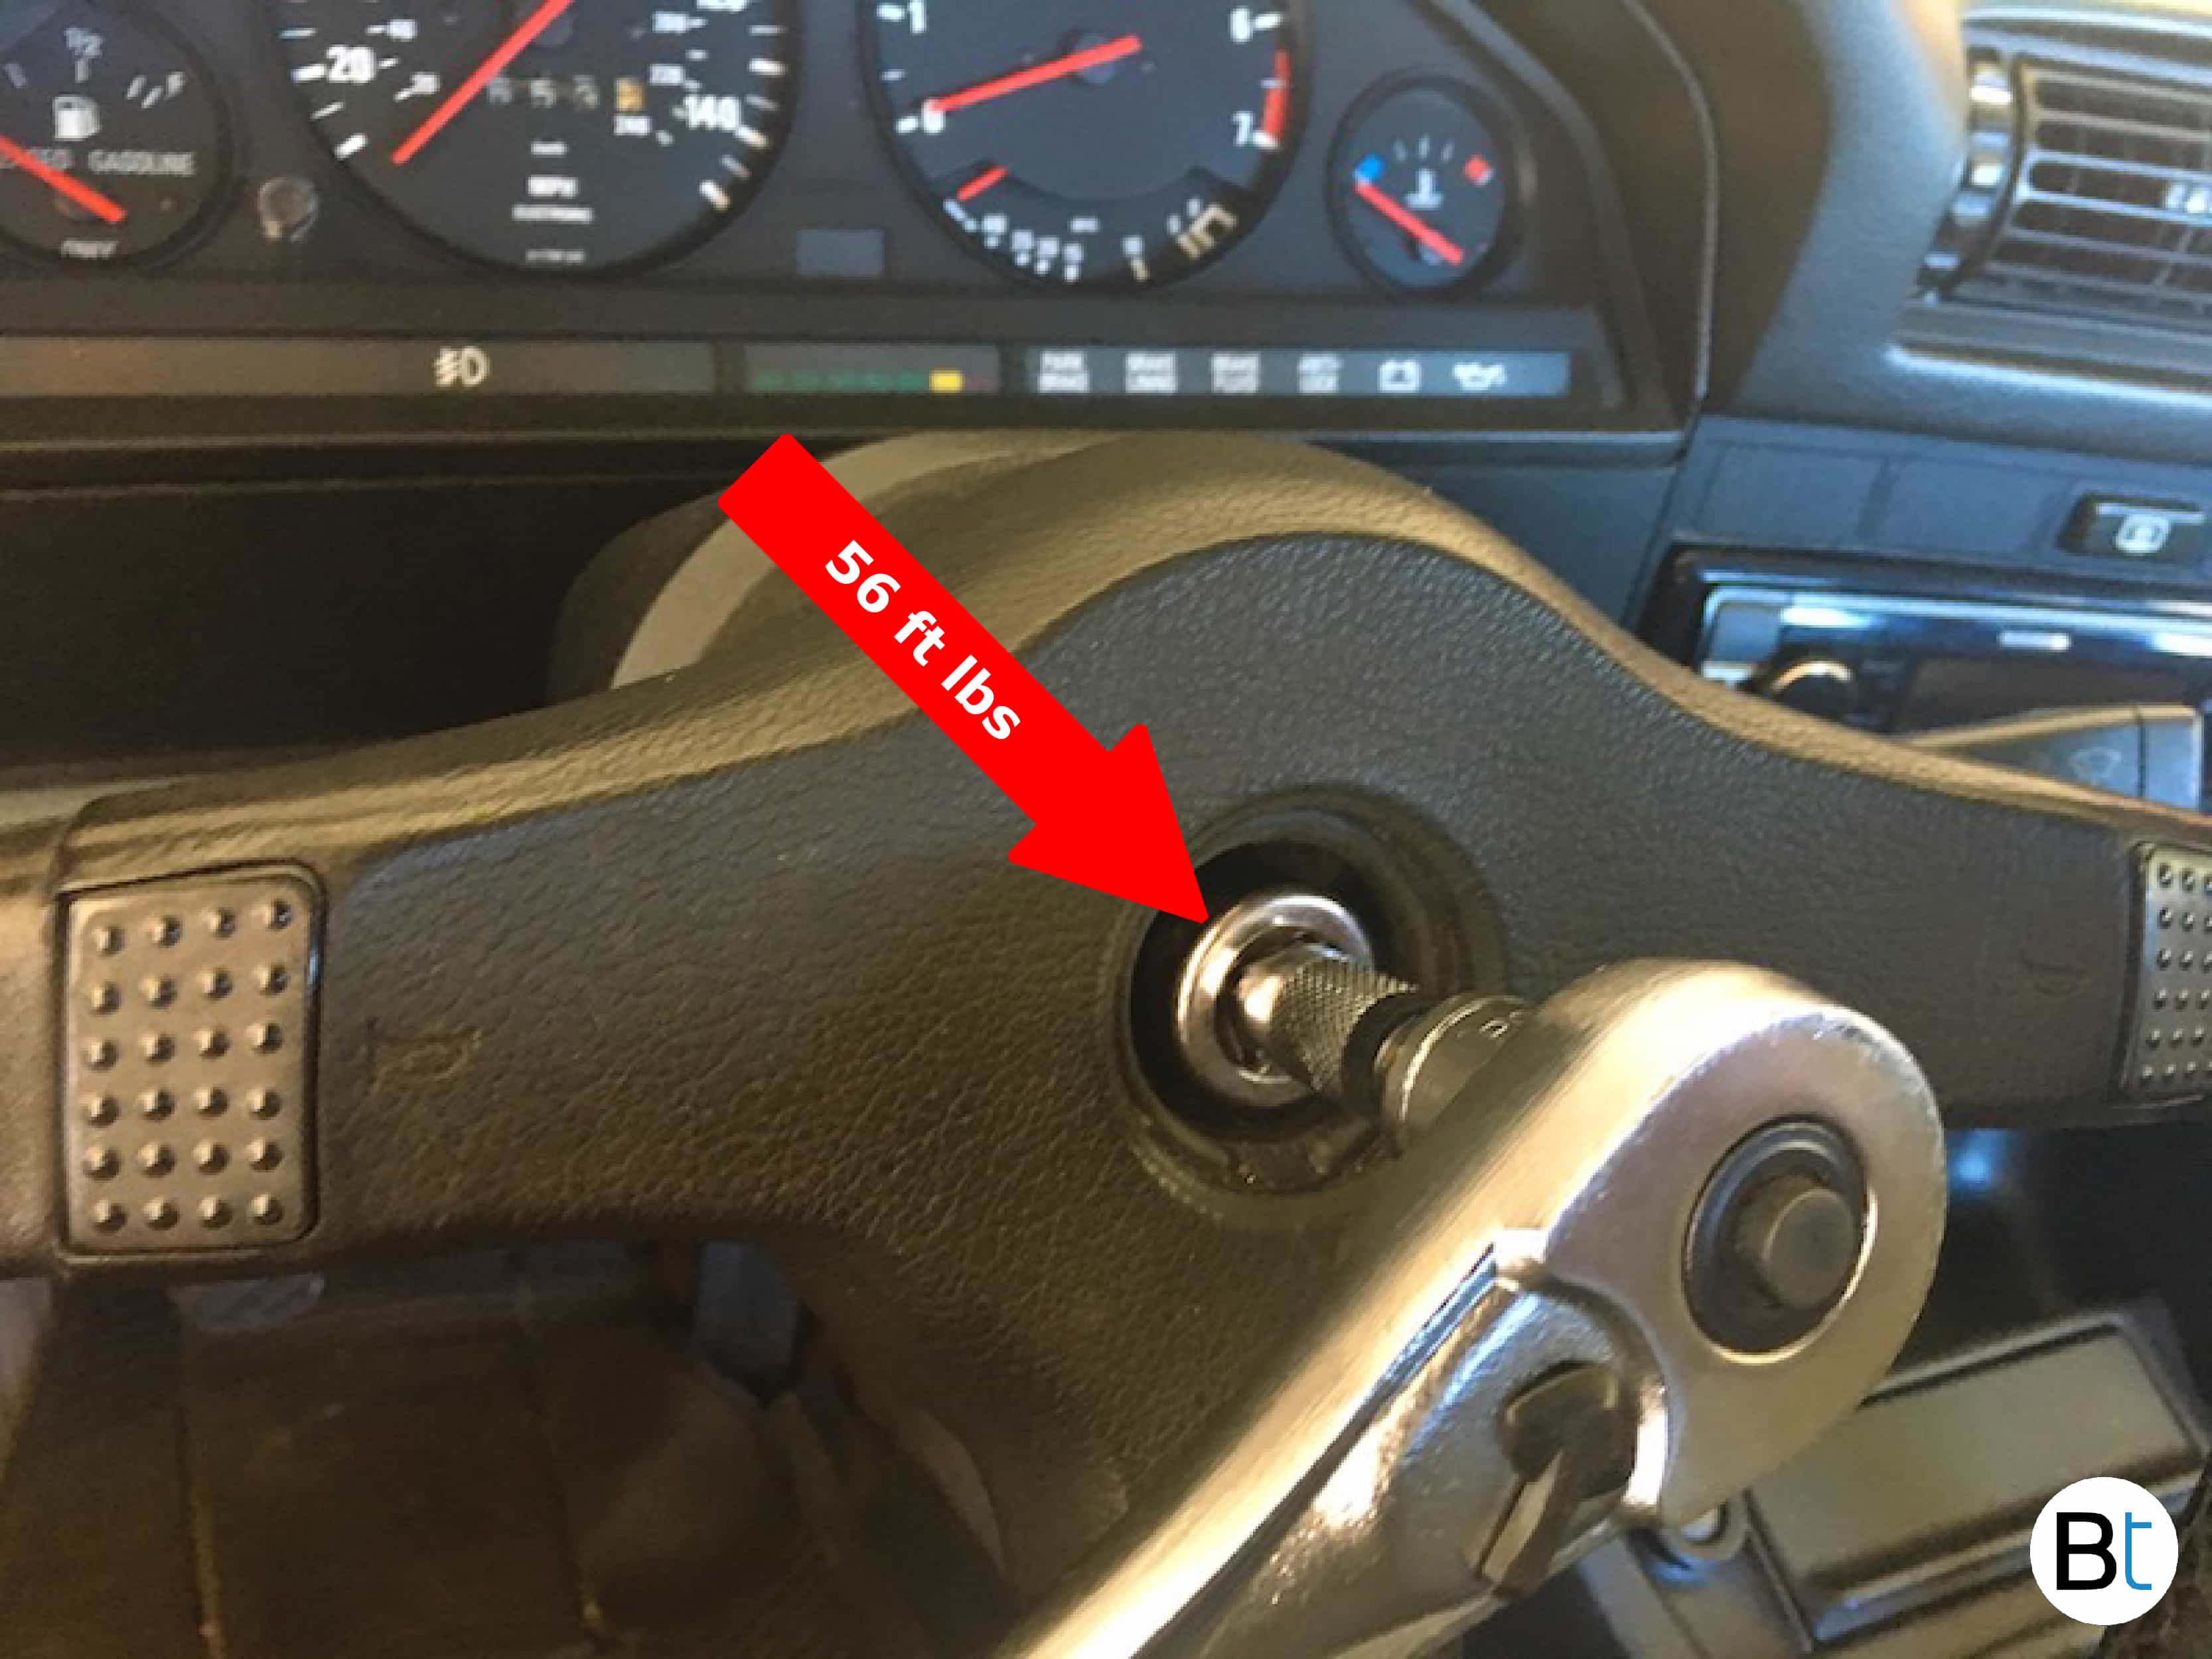 BMW steering wheel removal nut torque